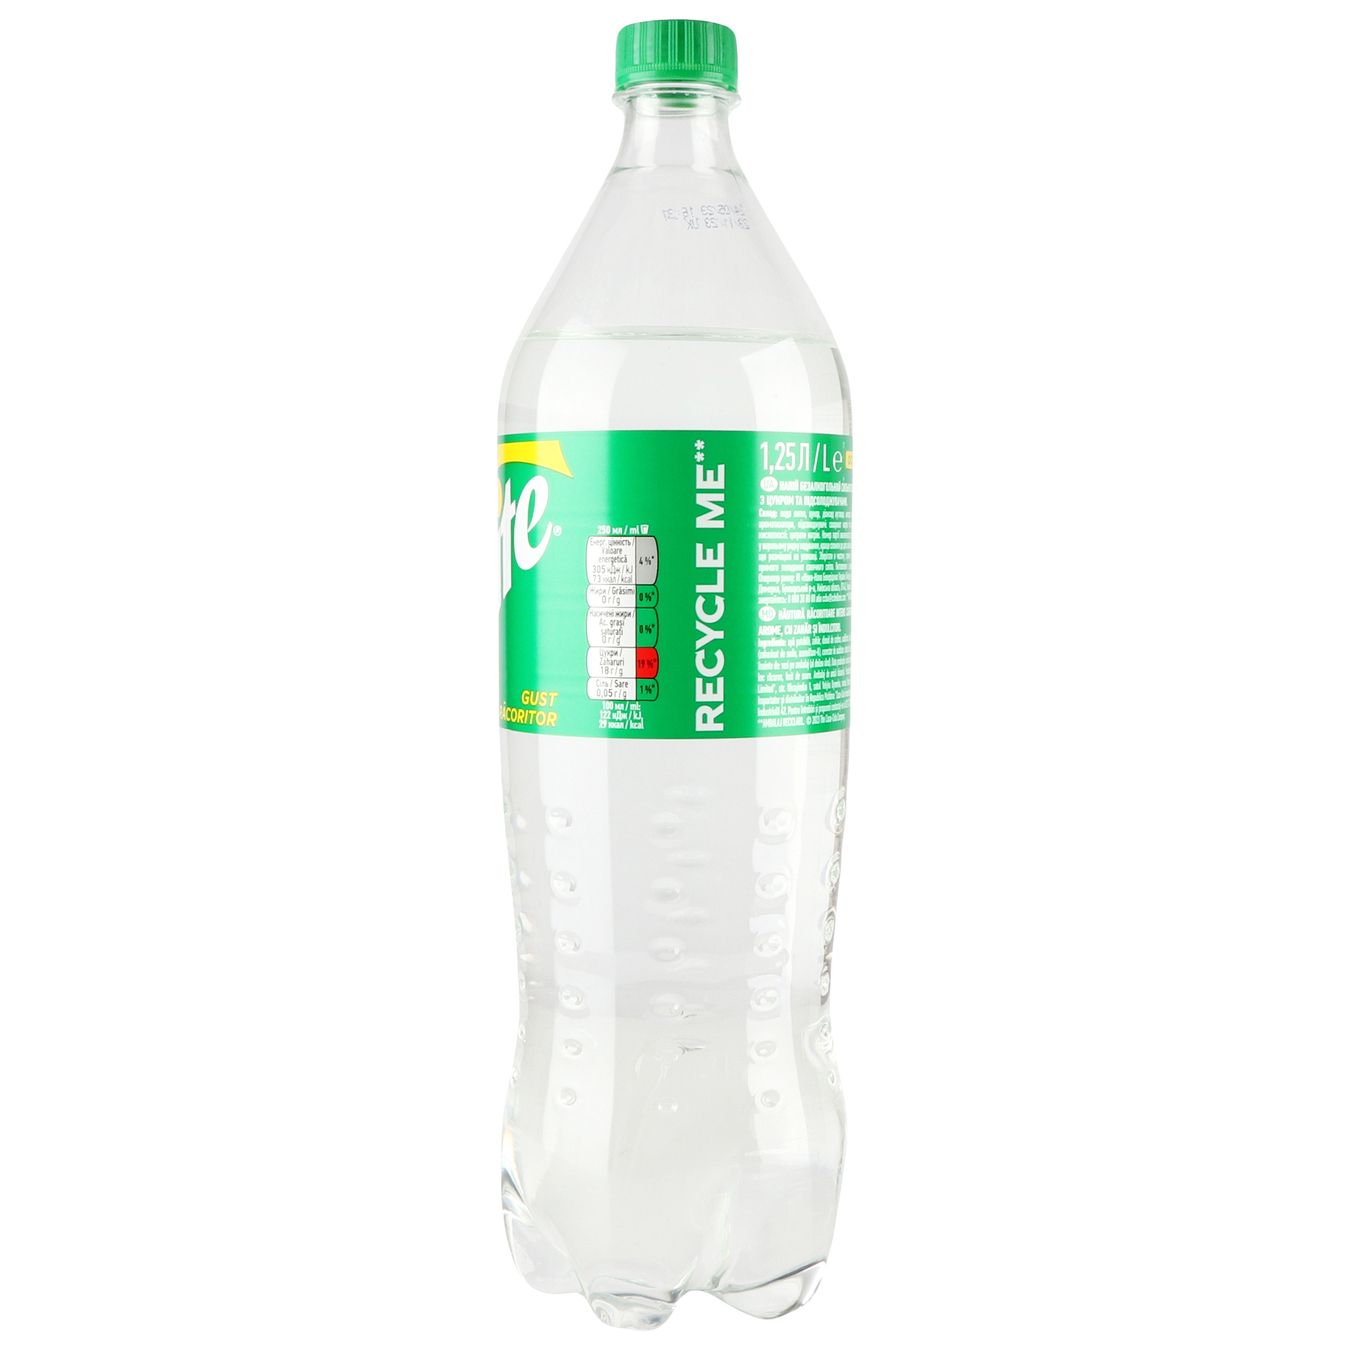 Carbonated drink Sprite 1.25 l PET 7